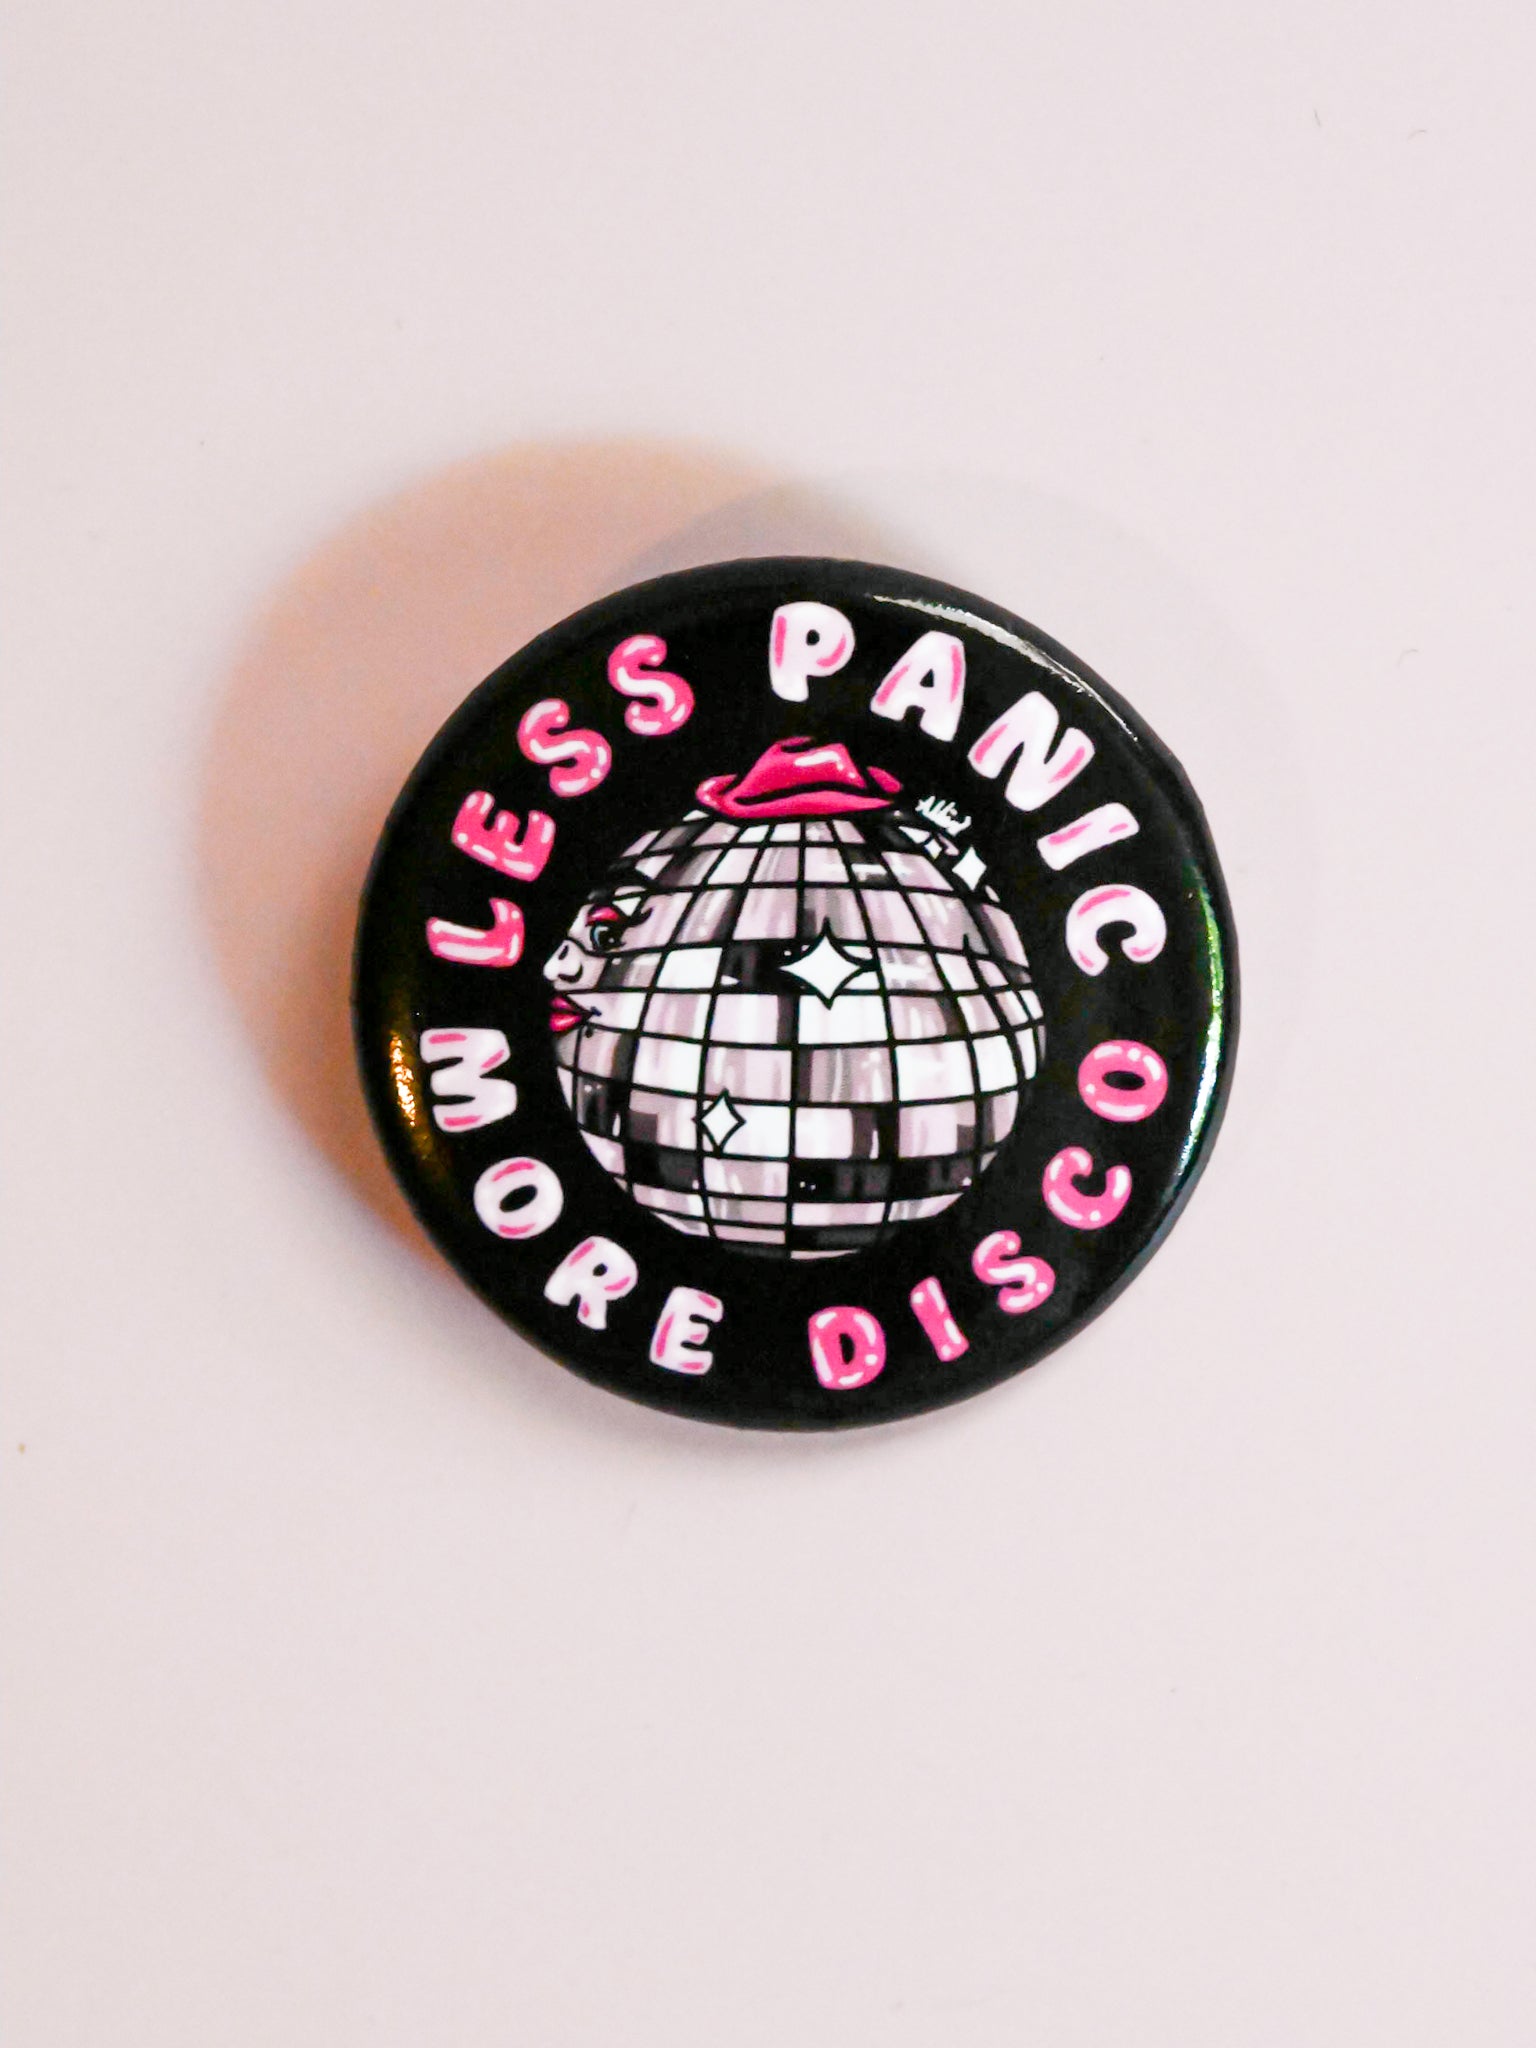 Less Panic More Disco Pin Button - Cheeky Art Studio-allison thompson-allisthompson-art